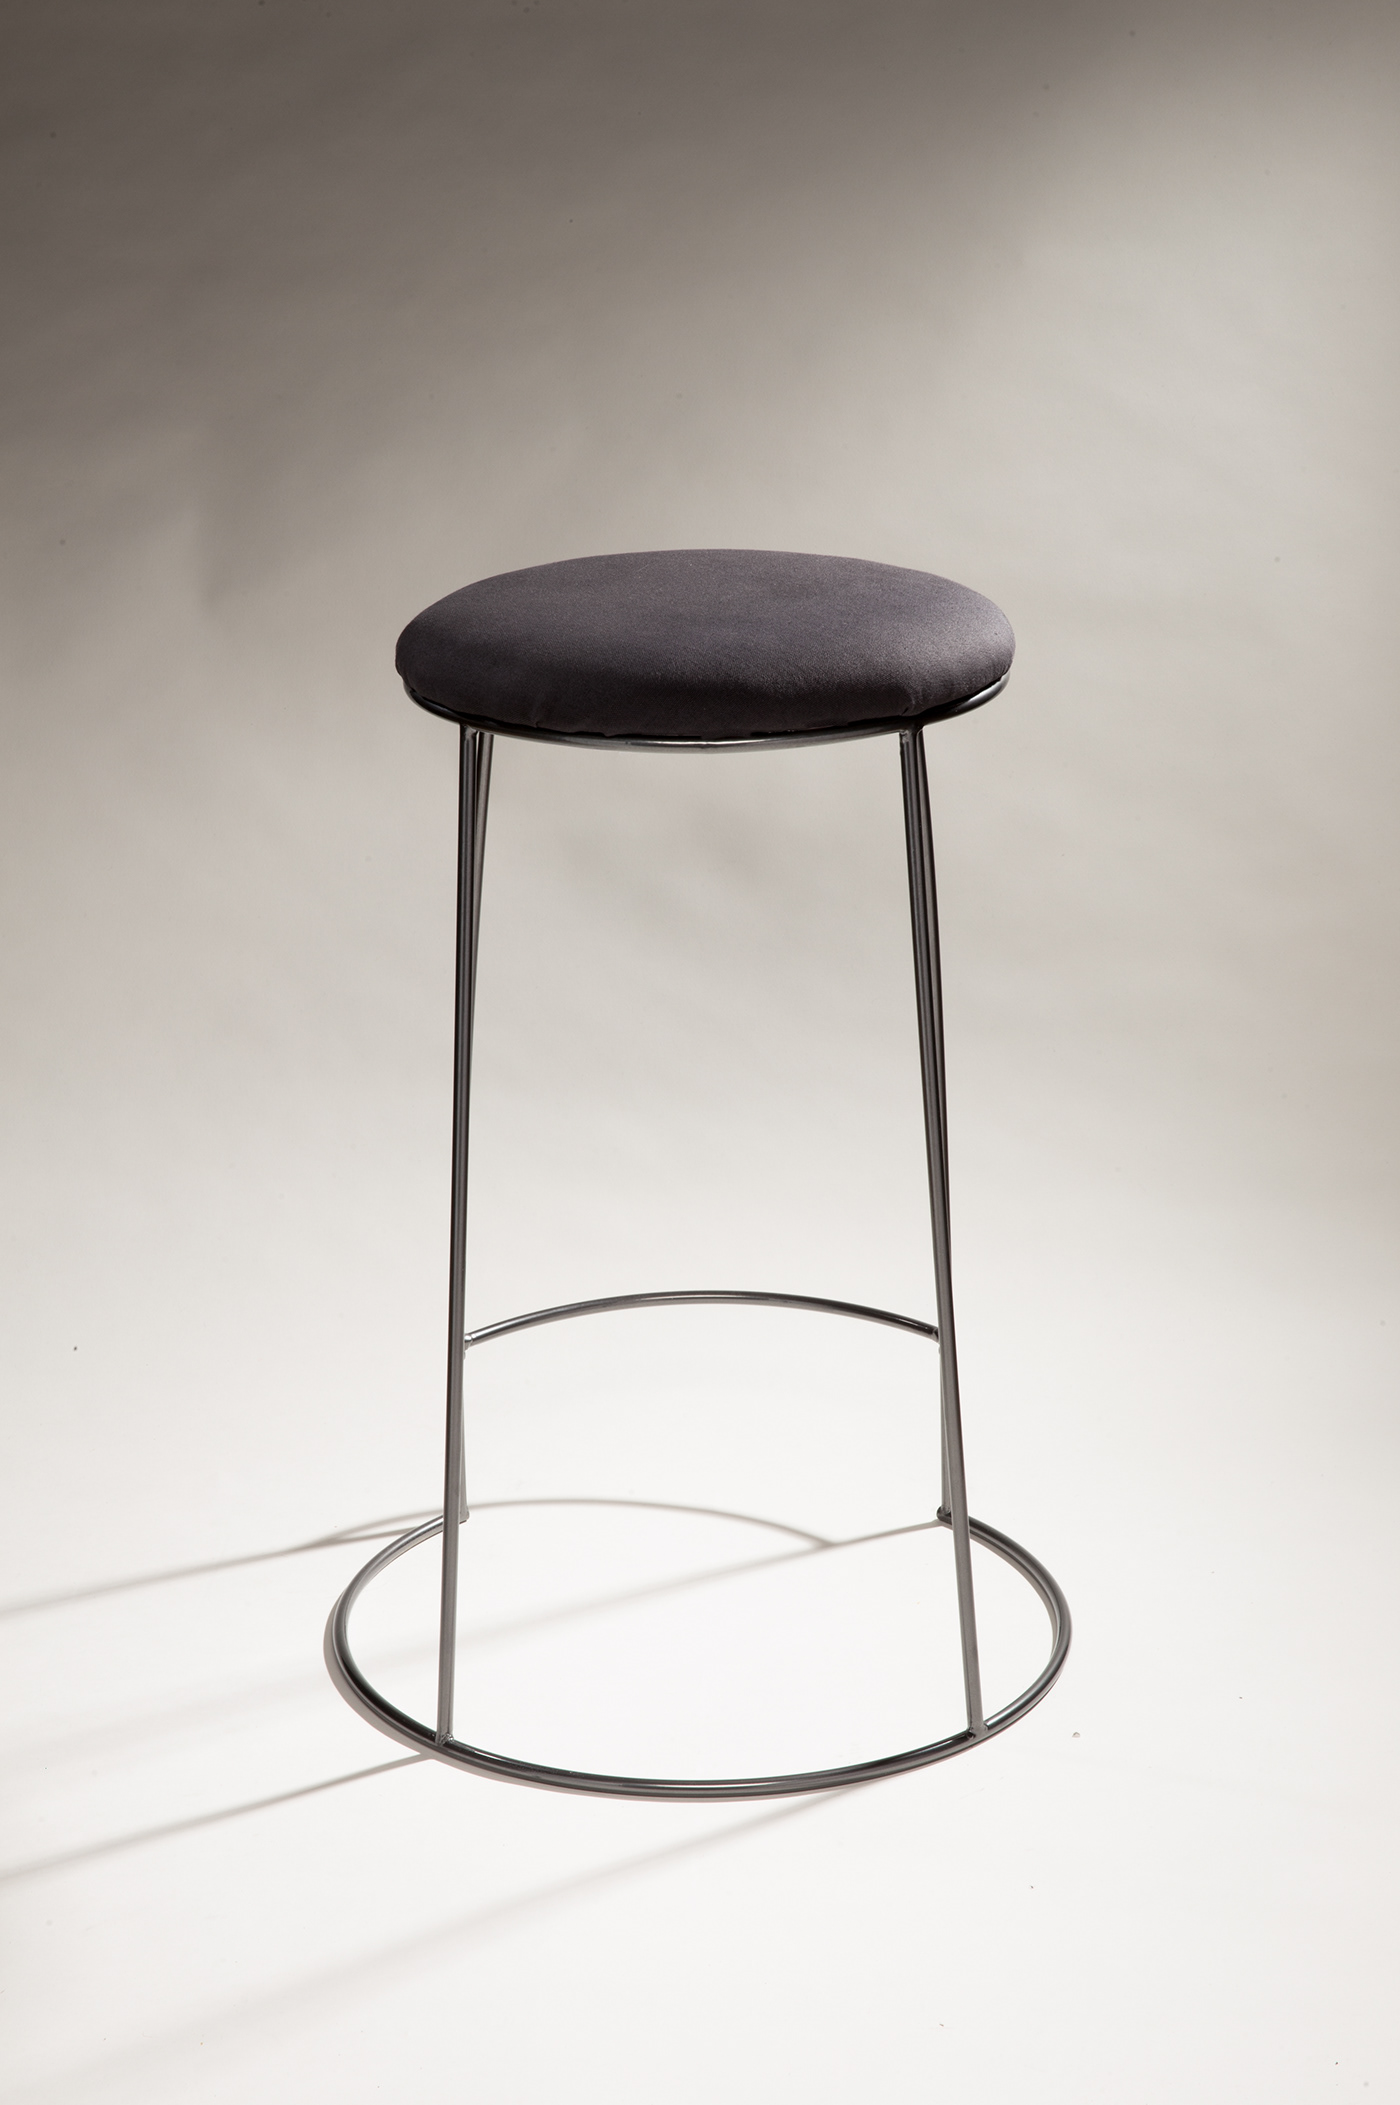 stool metal stool upholstery sit seat metal shiny chair modern minimal